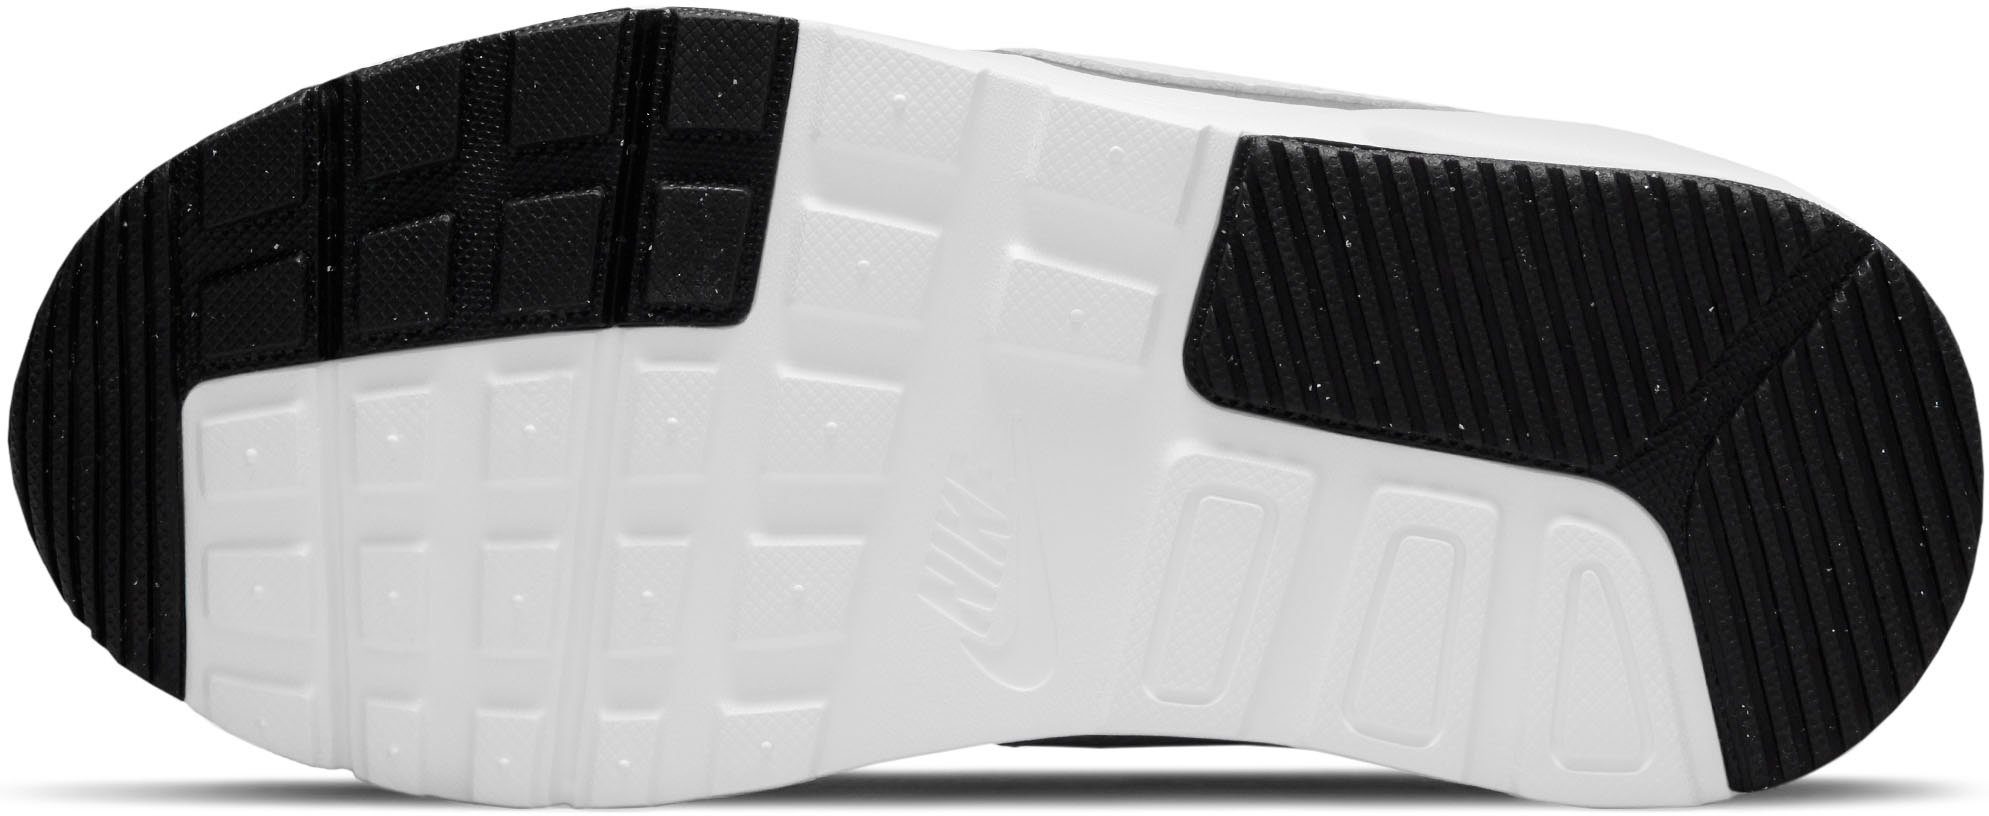 Nike Sportswear AIR MAX SC Sneaker (PS) schwarz-weiß